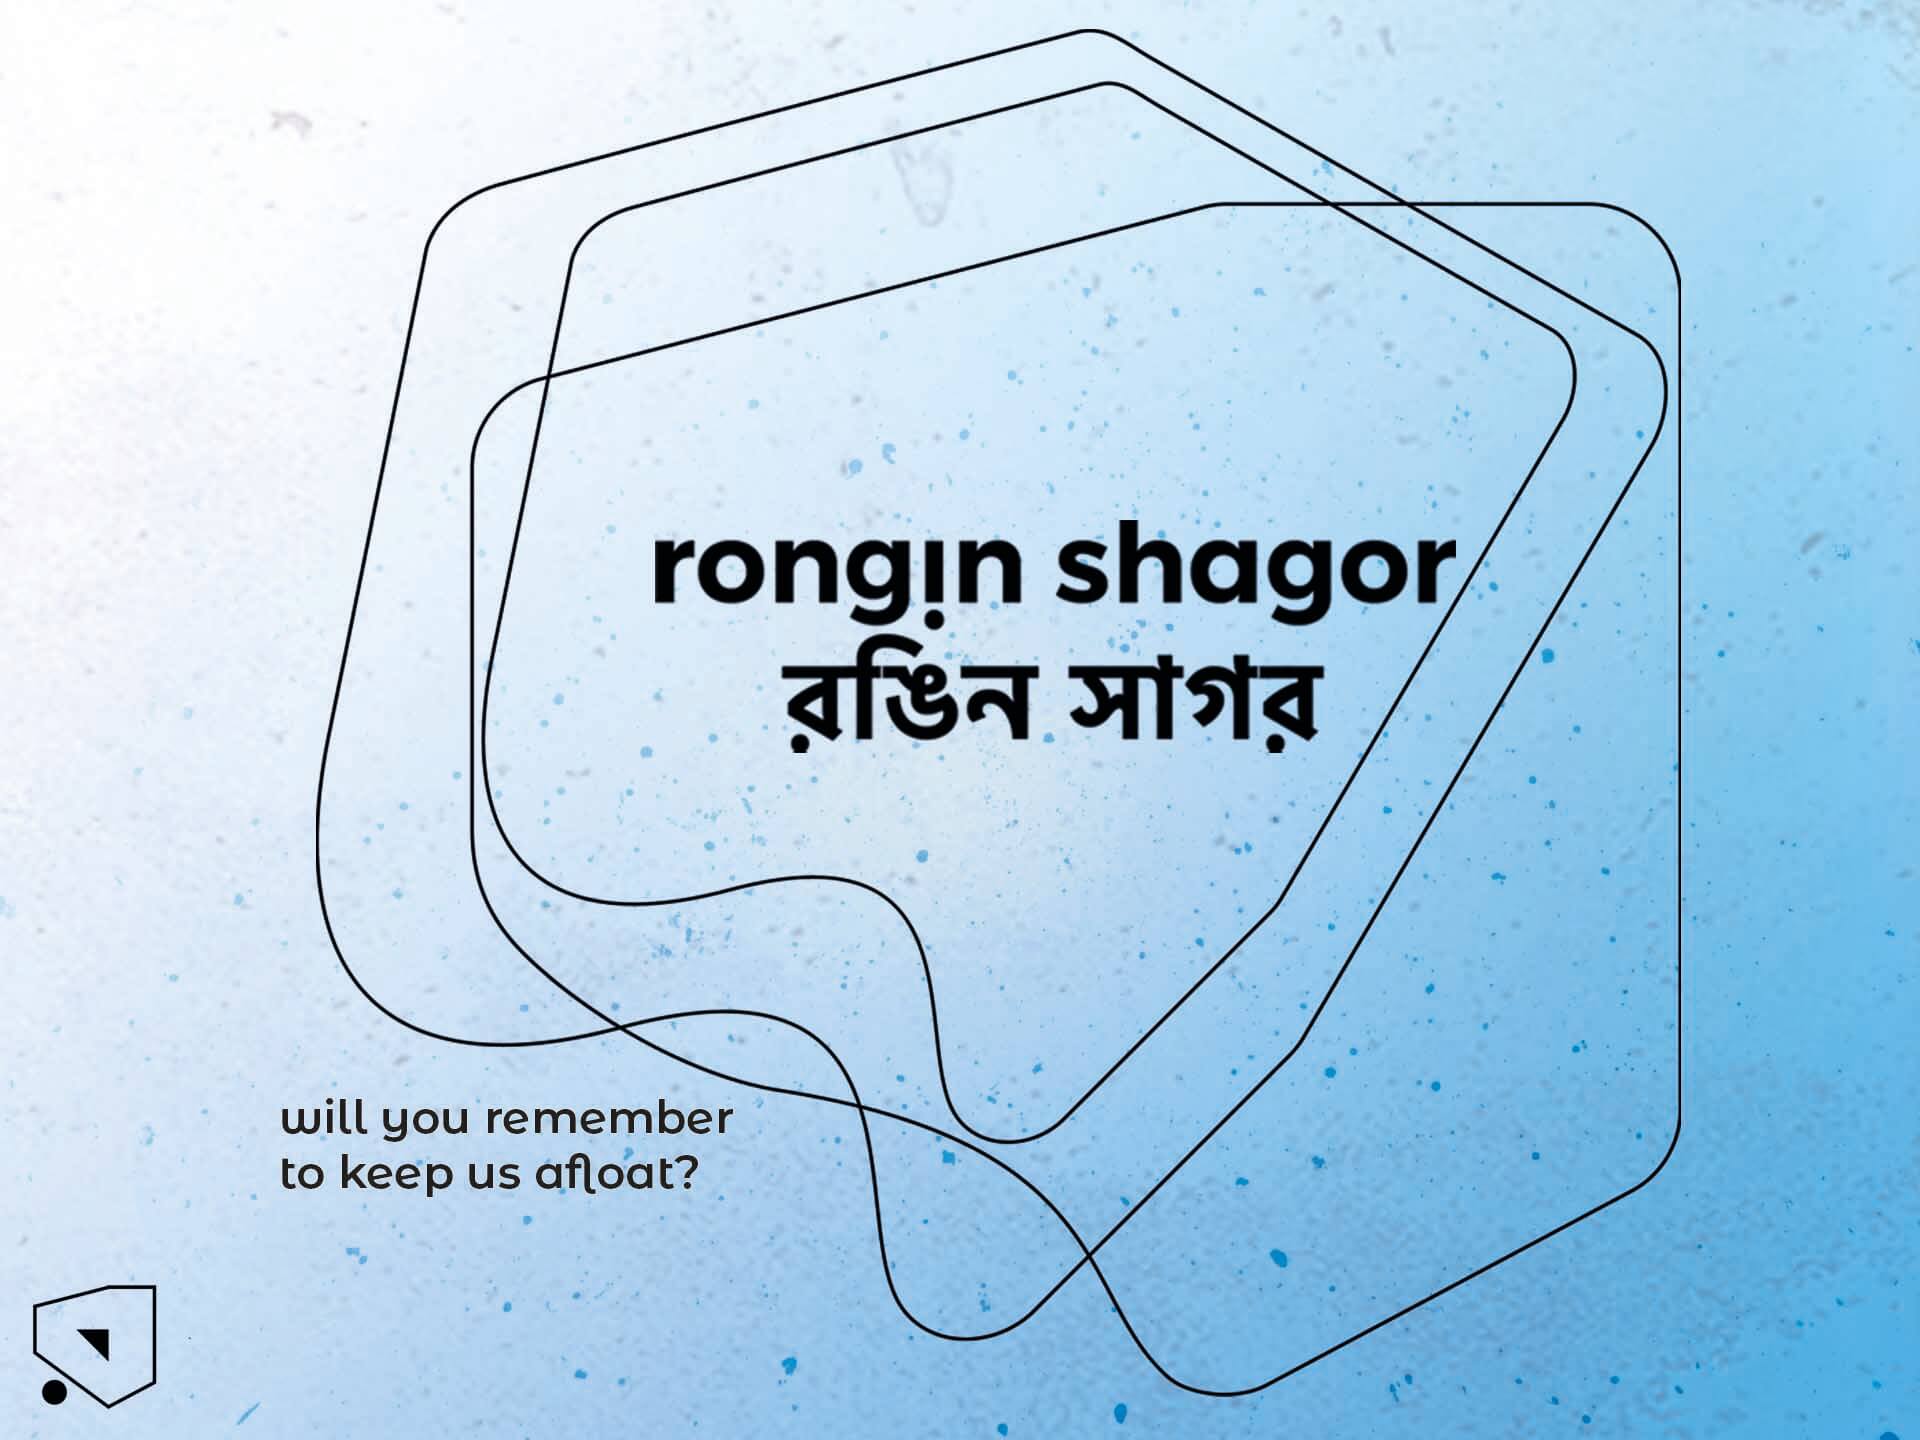 Rongin Shagor / রঙিন সাগর